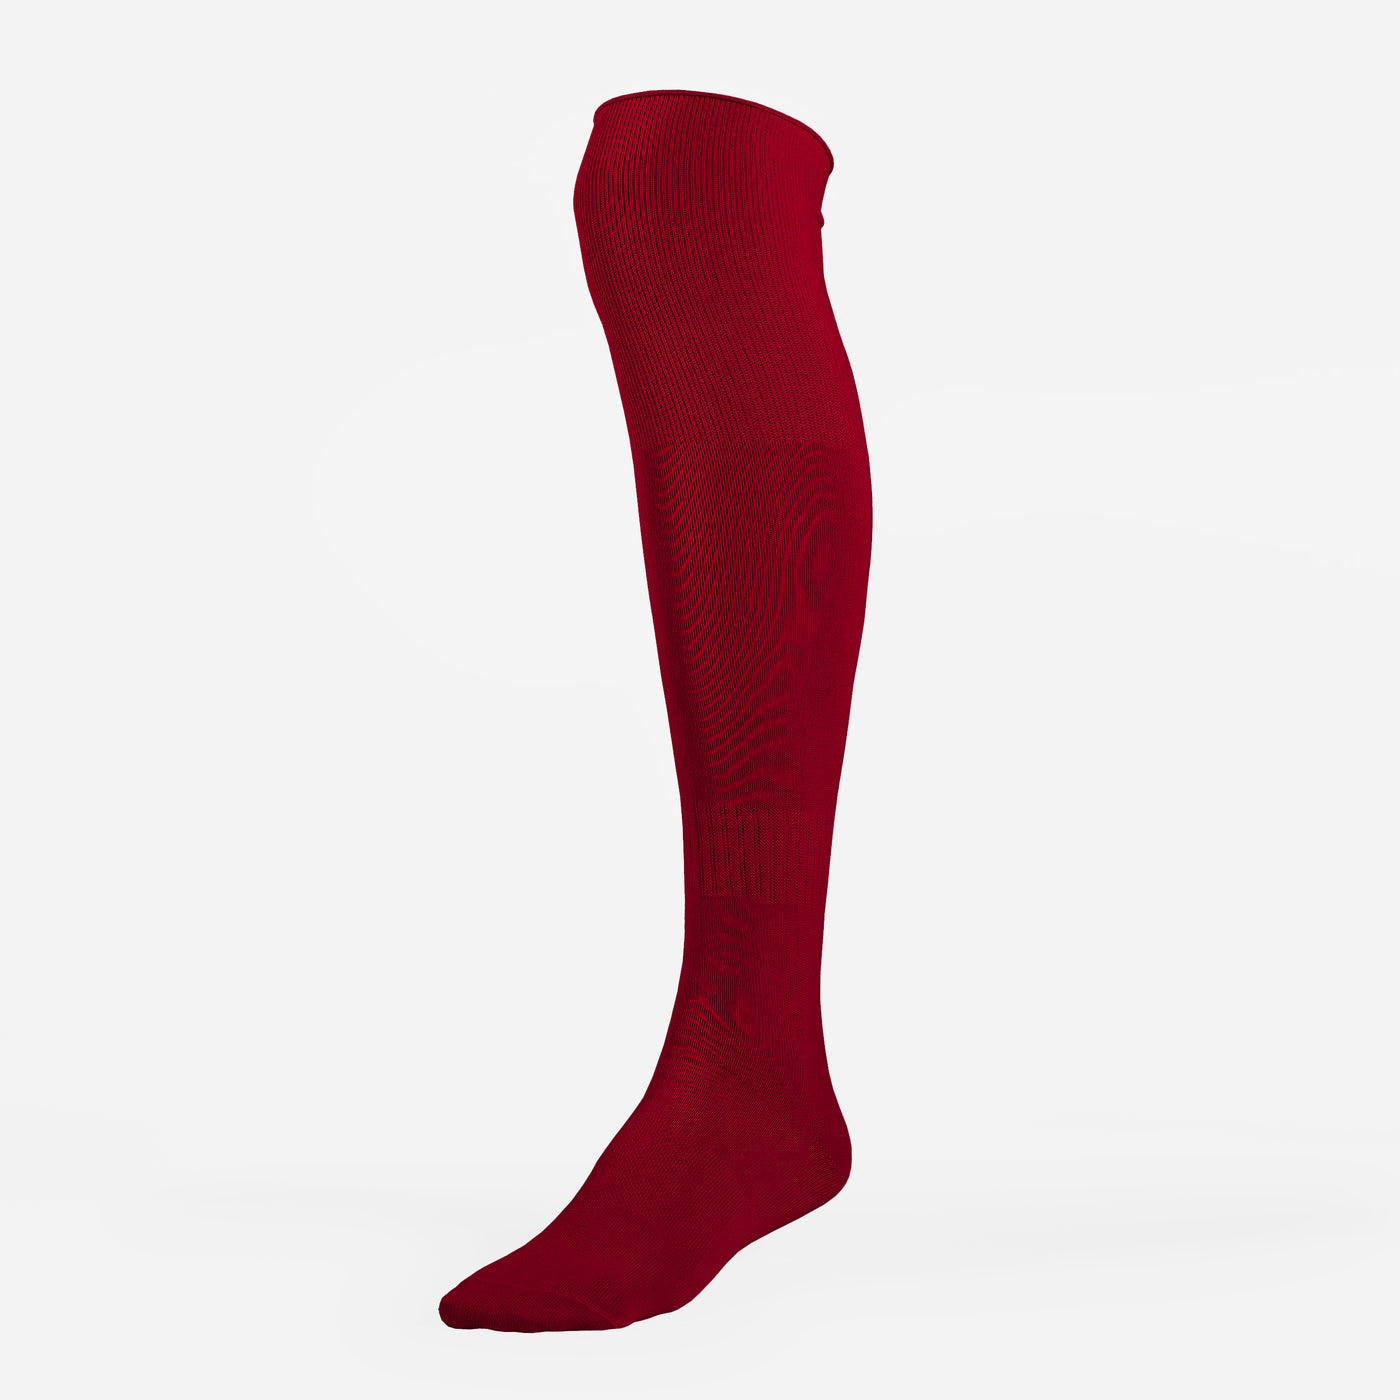 Cardinal Red Baseball Knee-High Socks